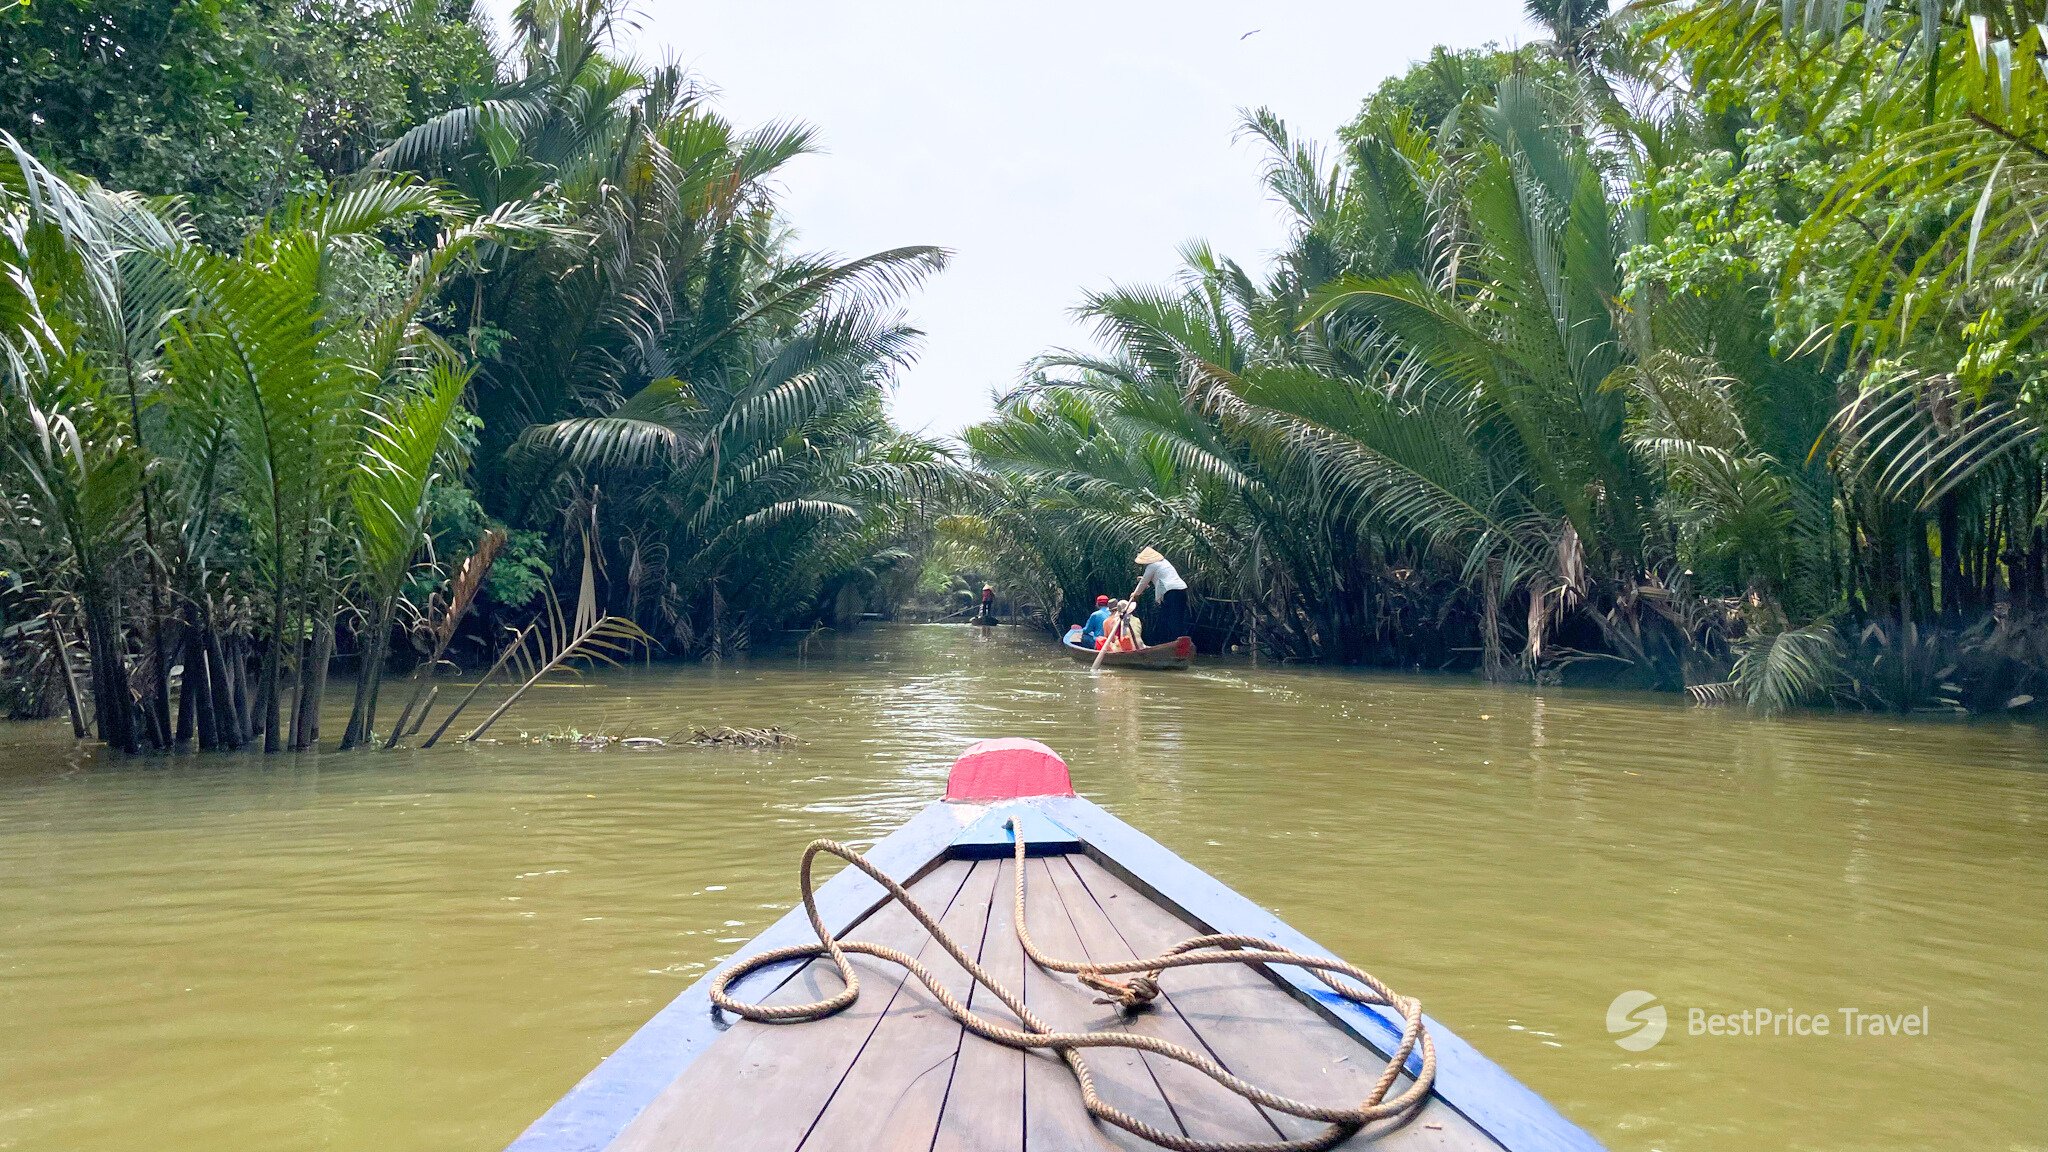 Day 13 Unwind In A Mekong Delta Boat Trip